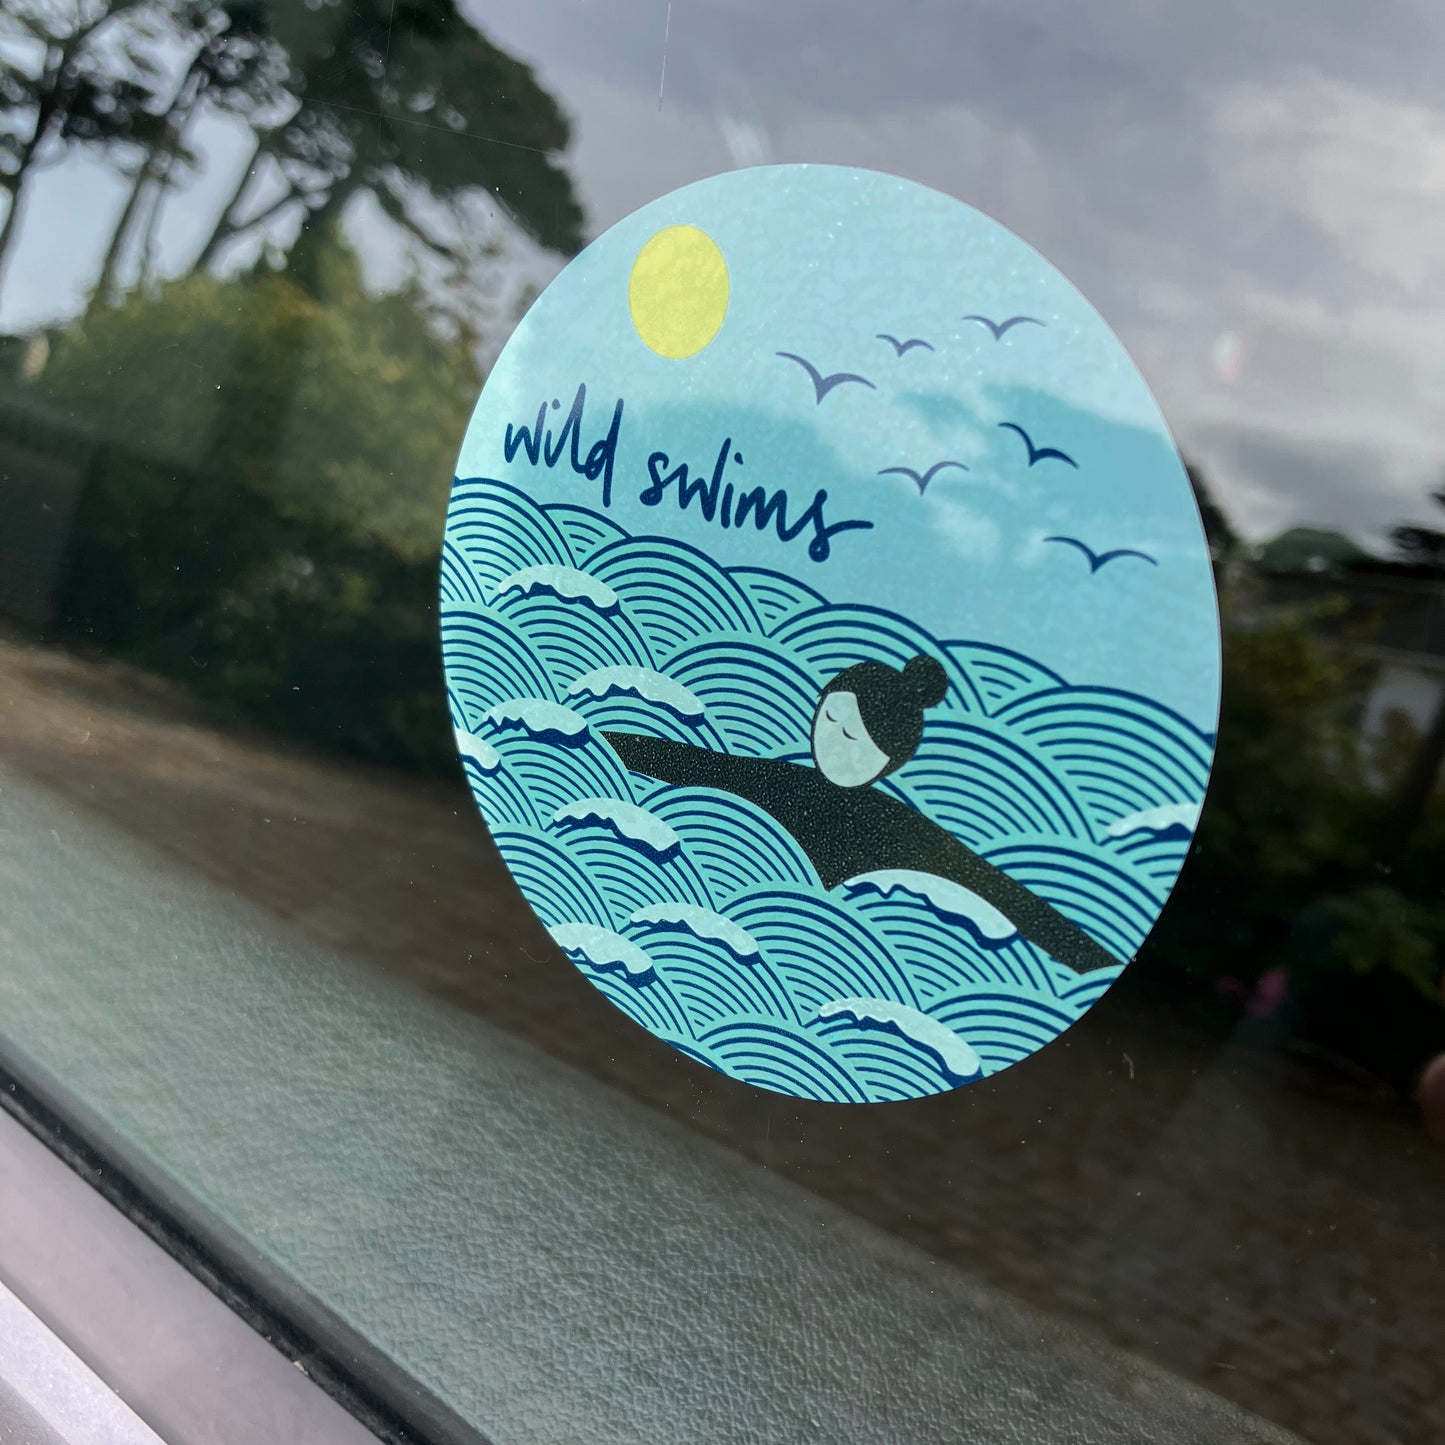 Wild swims self cling window sticker